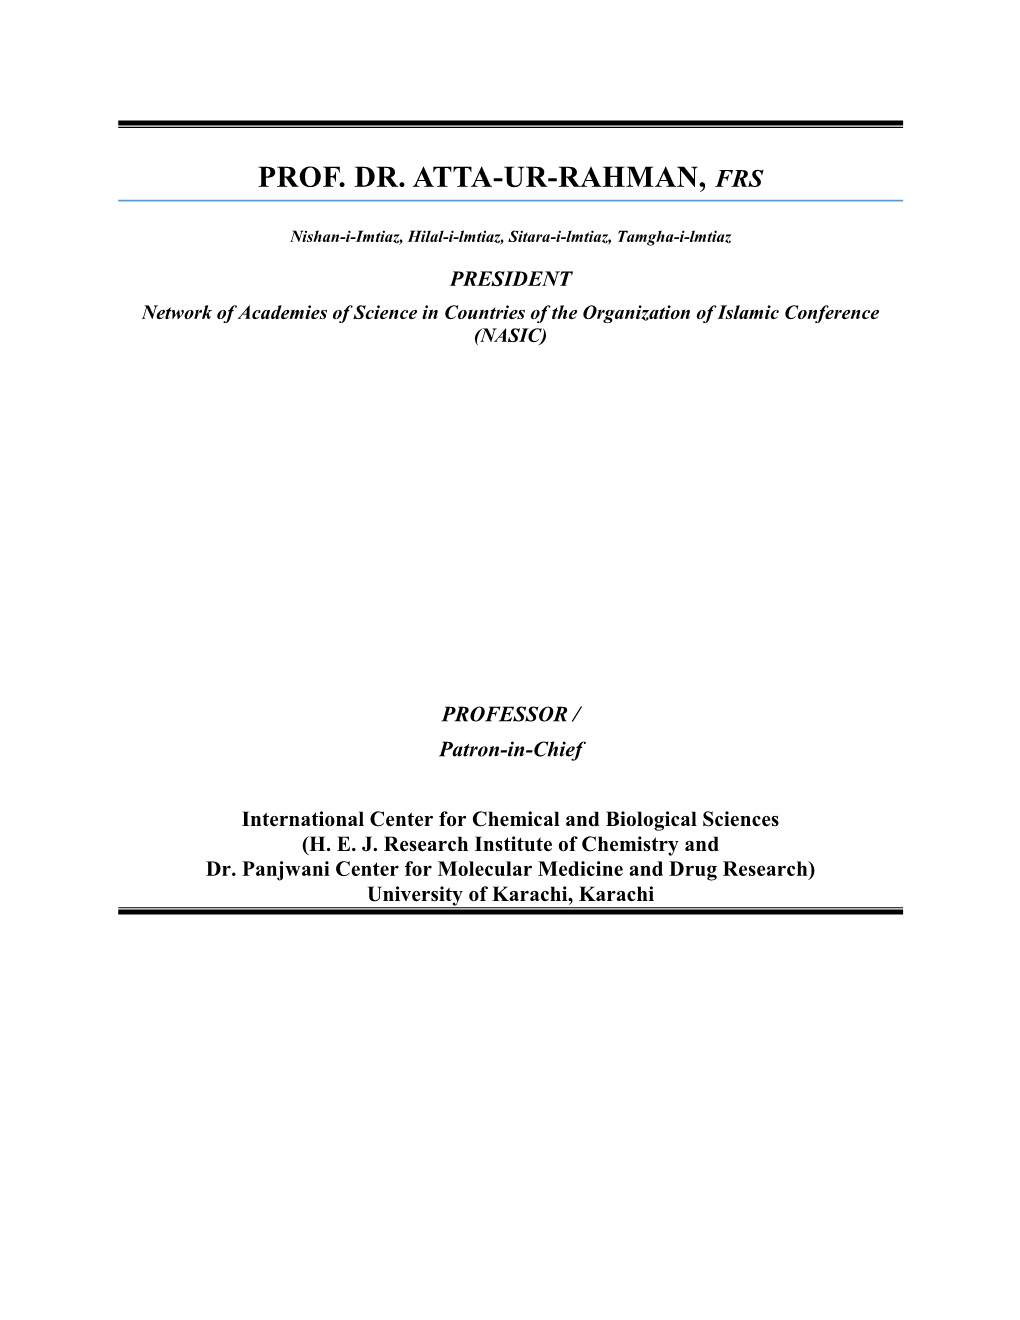 Prof. Dr. Atta-Ur-Rahman, Frs